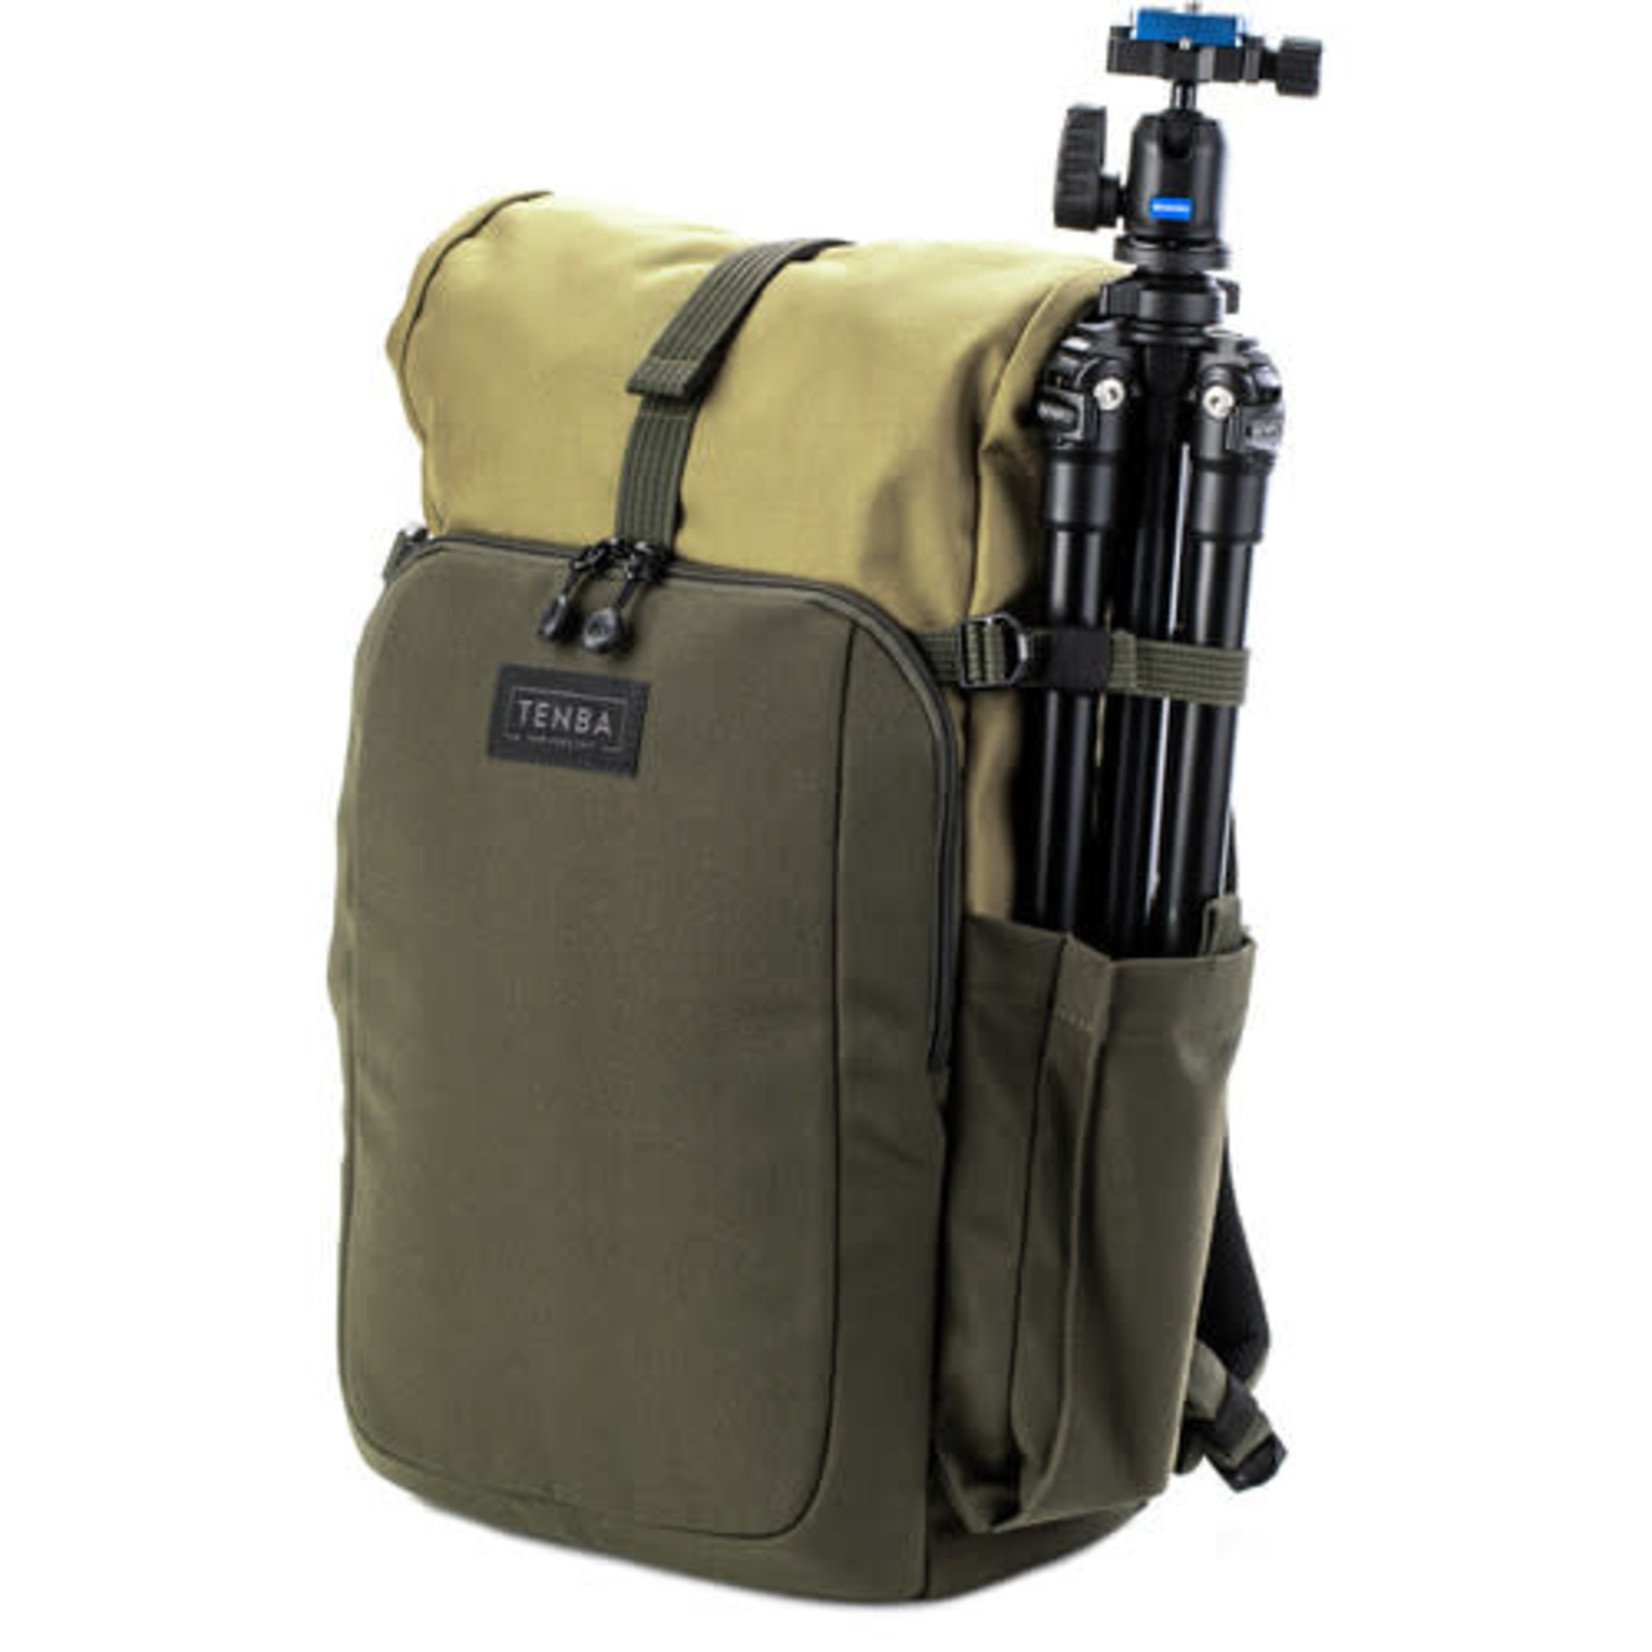 Tenba Fulton v2 16L Backpack – Tan/Olive